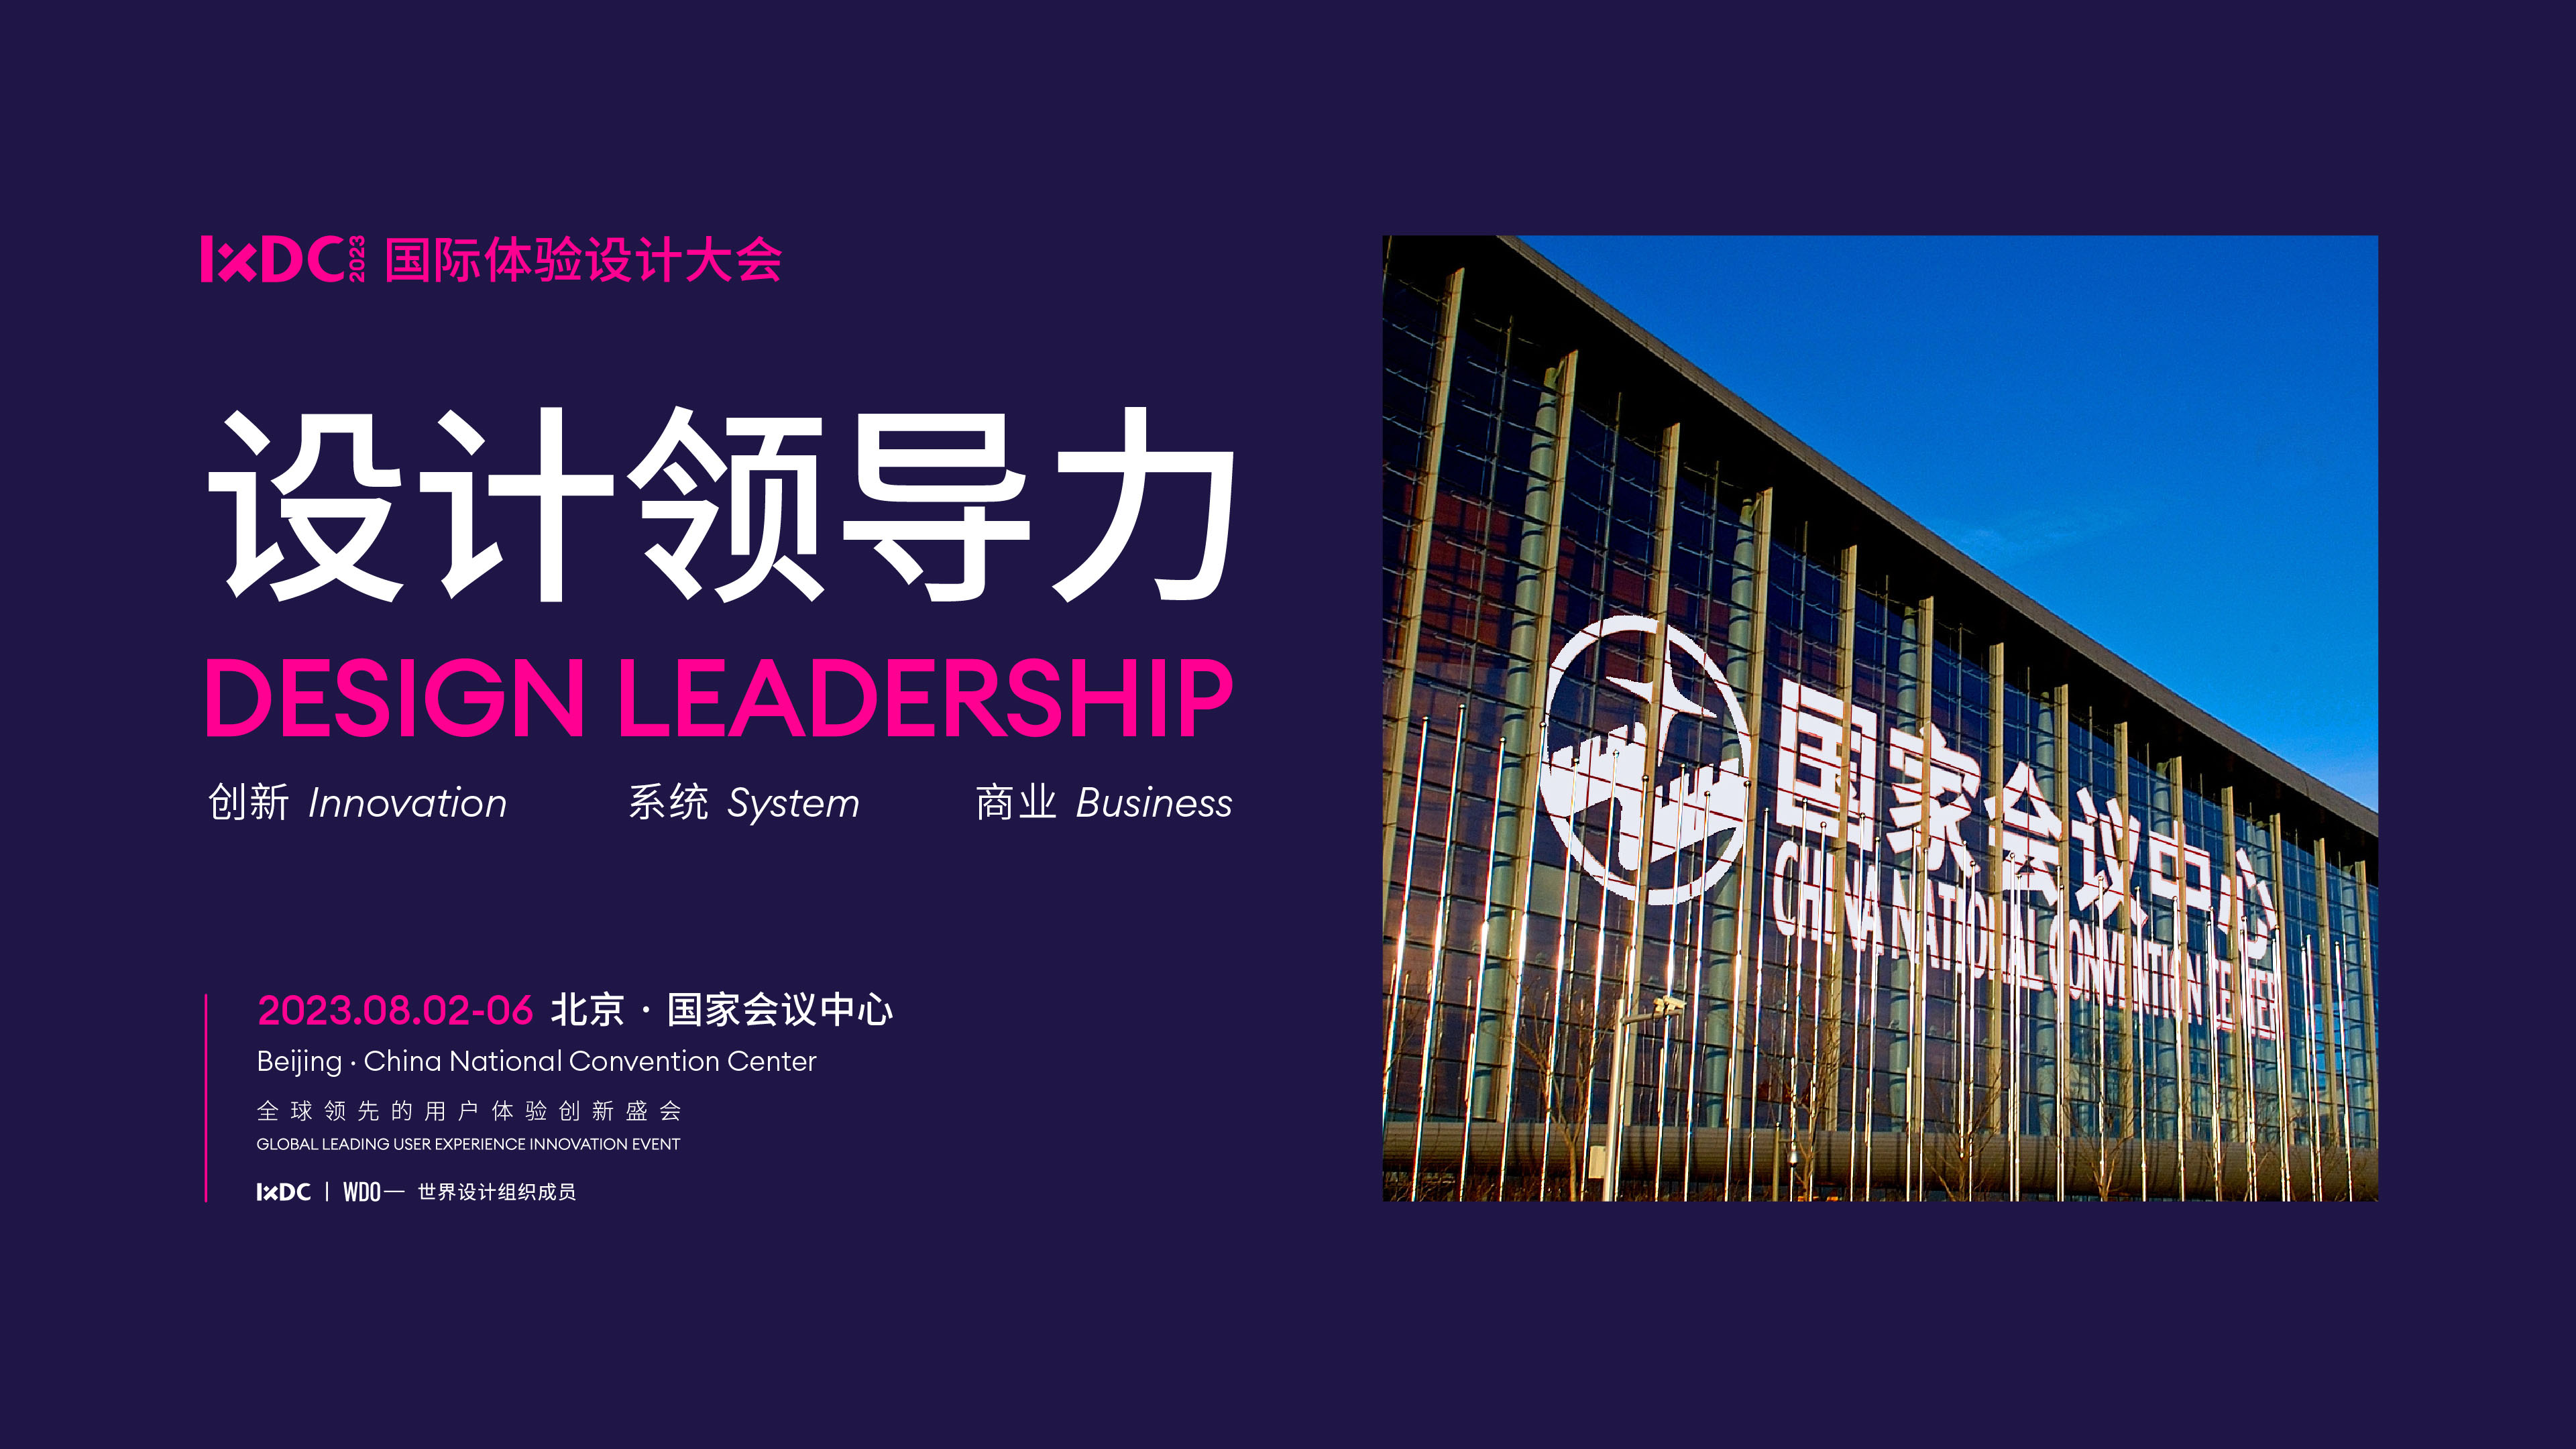 IXDC2023国际体验设计大会将于8月在北京举办！邀您共襄盛会！